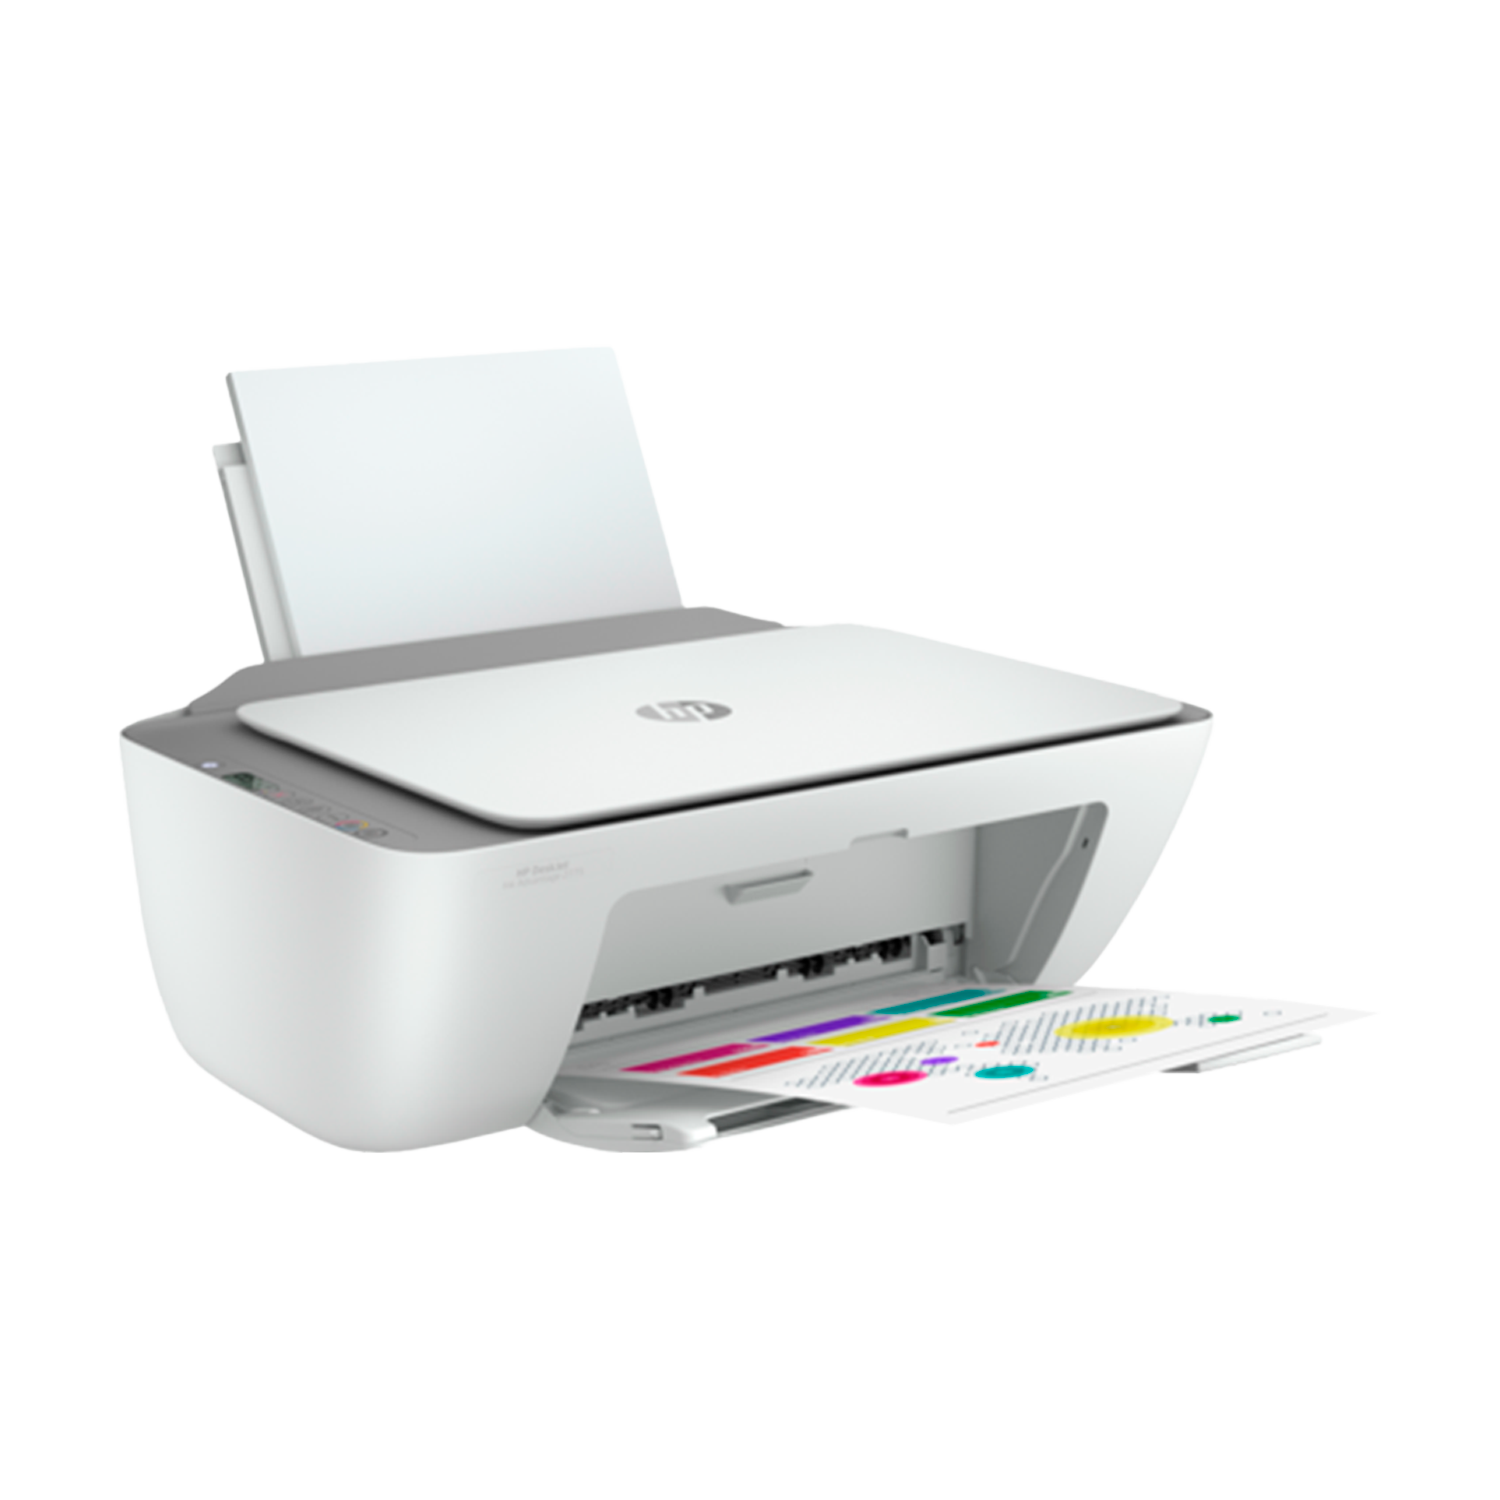 Impressora Multifuncional HP Deskjet 2775 / Scan / WIFI / Bivolt - (Cartucho 667 Preto/Colorido)